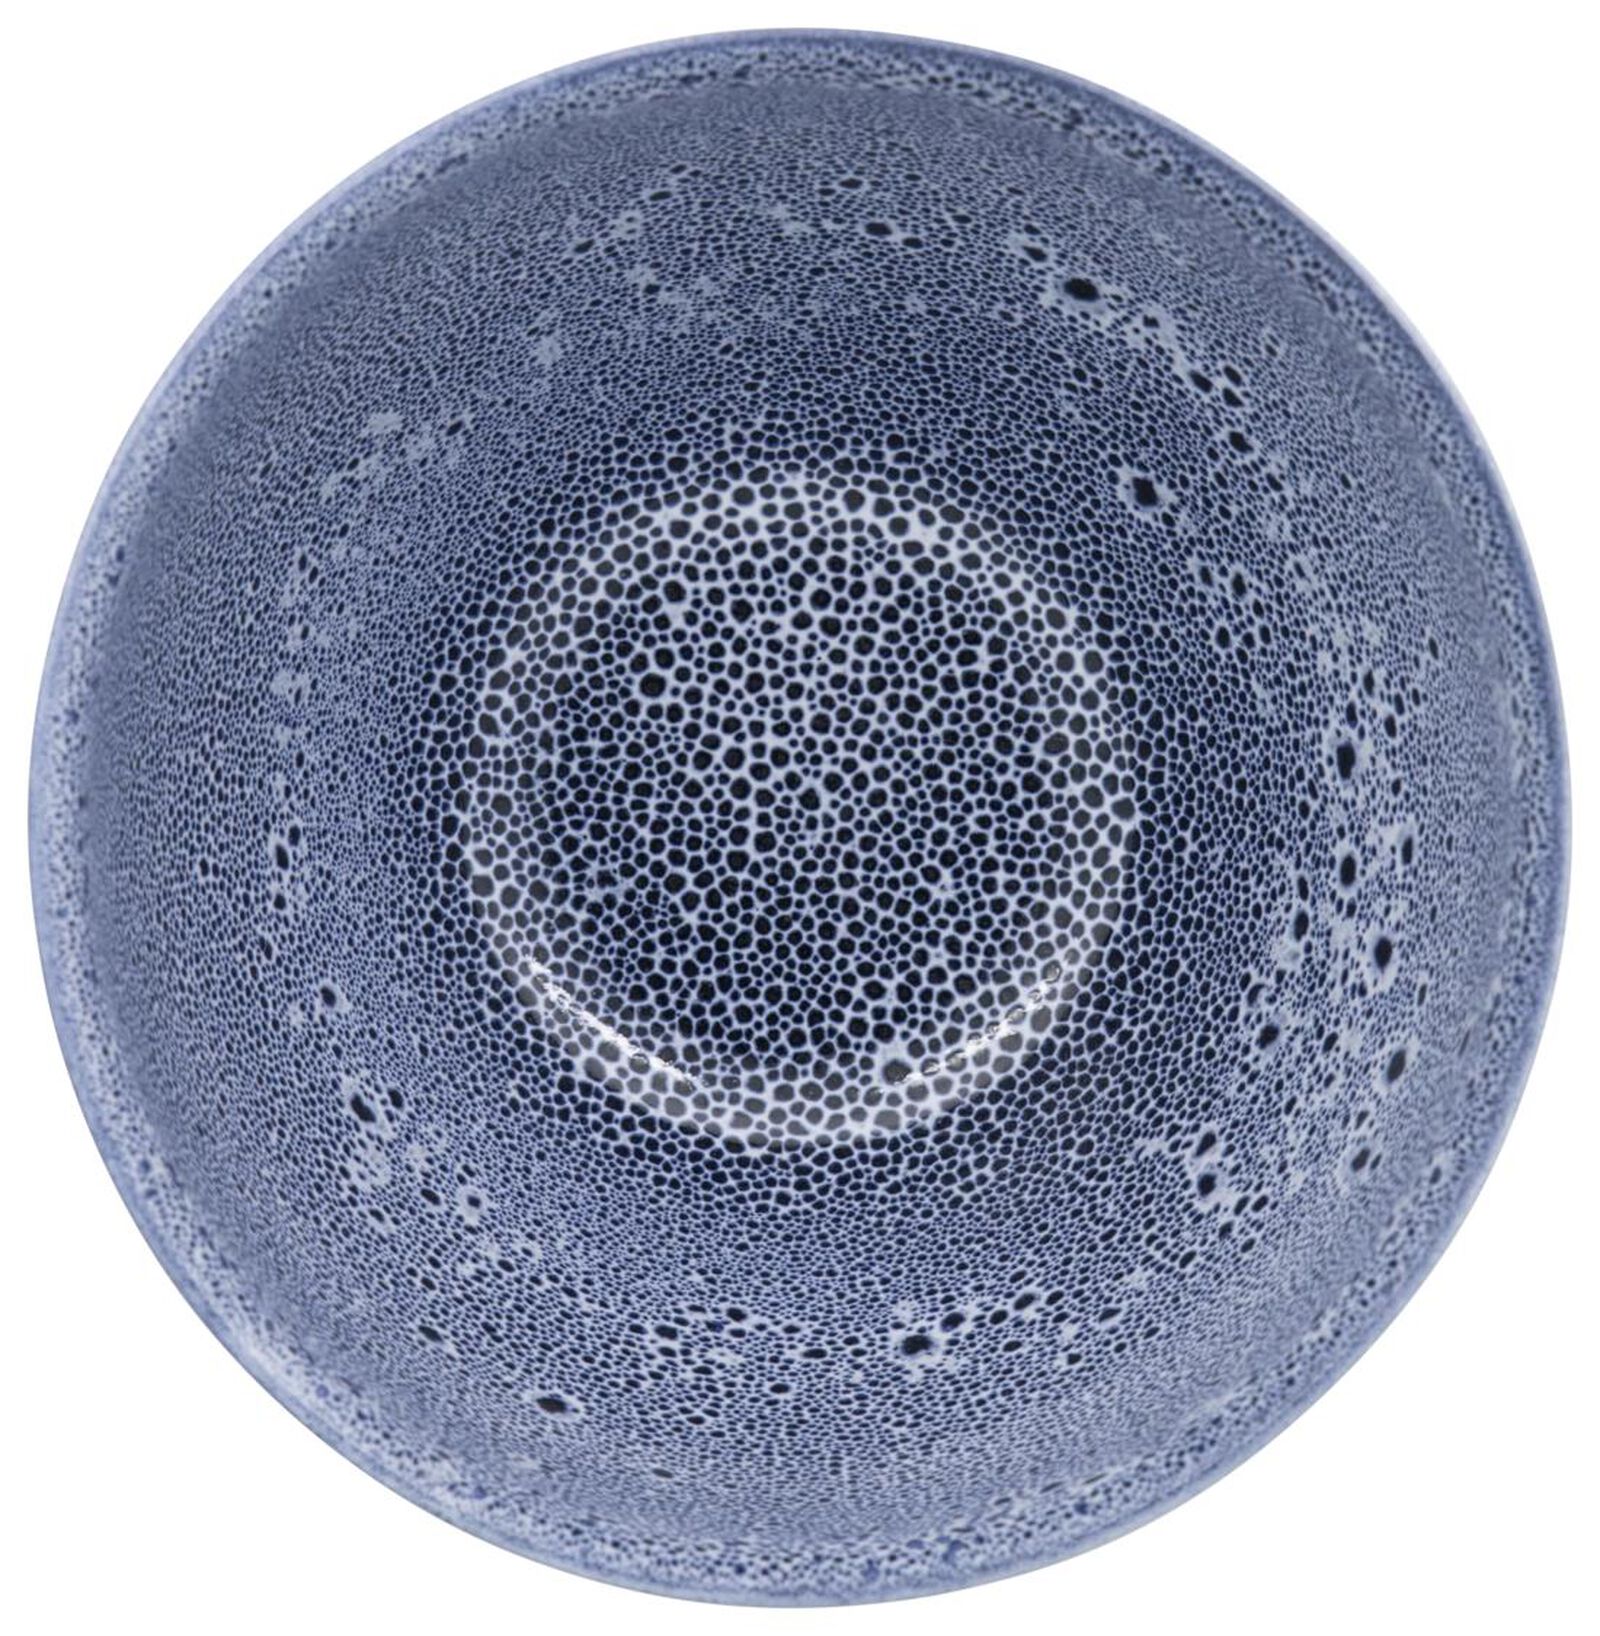 schaal 14.5cm Porto reactief glazuur wit/blauw - 9602254 - HEMA